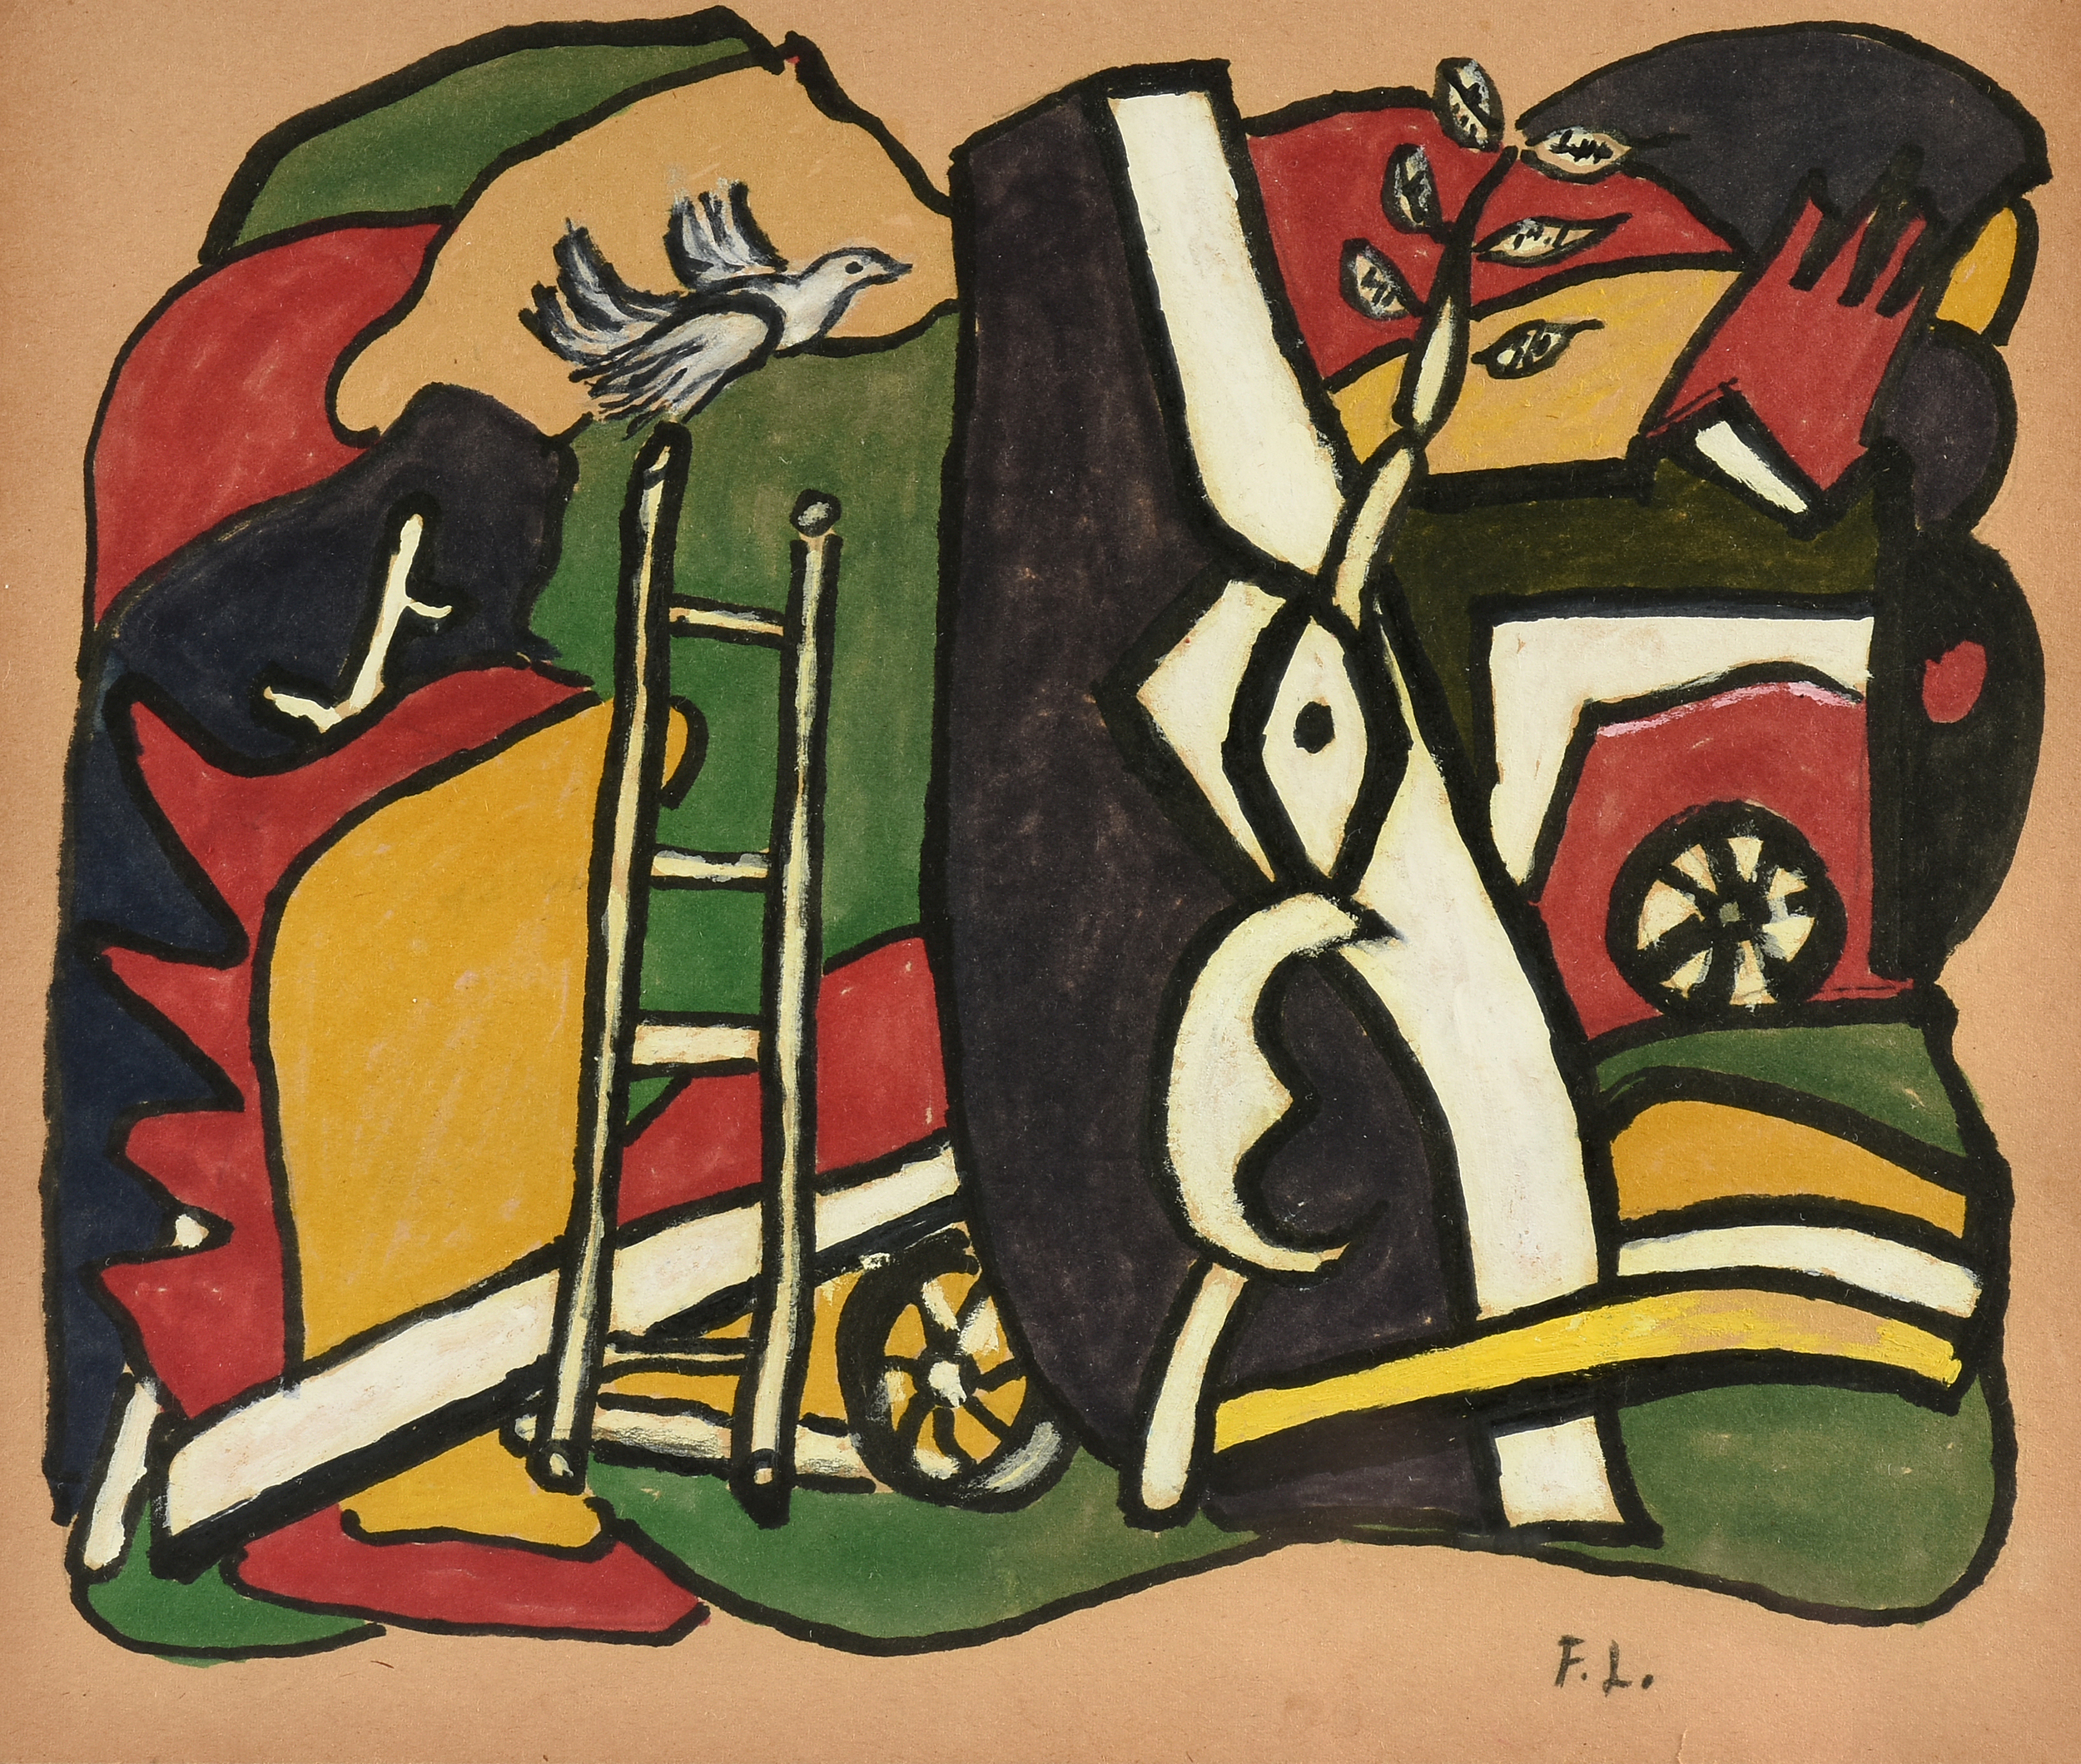 JOSEPH FERNAND HENRI LÉGER (French 1881-1955) A PRINT, "Untitled," CIRCA 1950, gouache on paper,